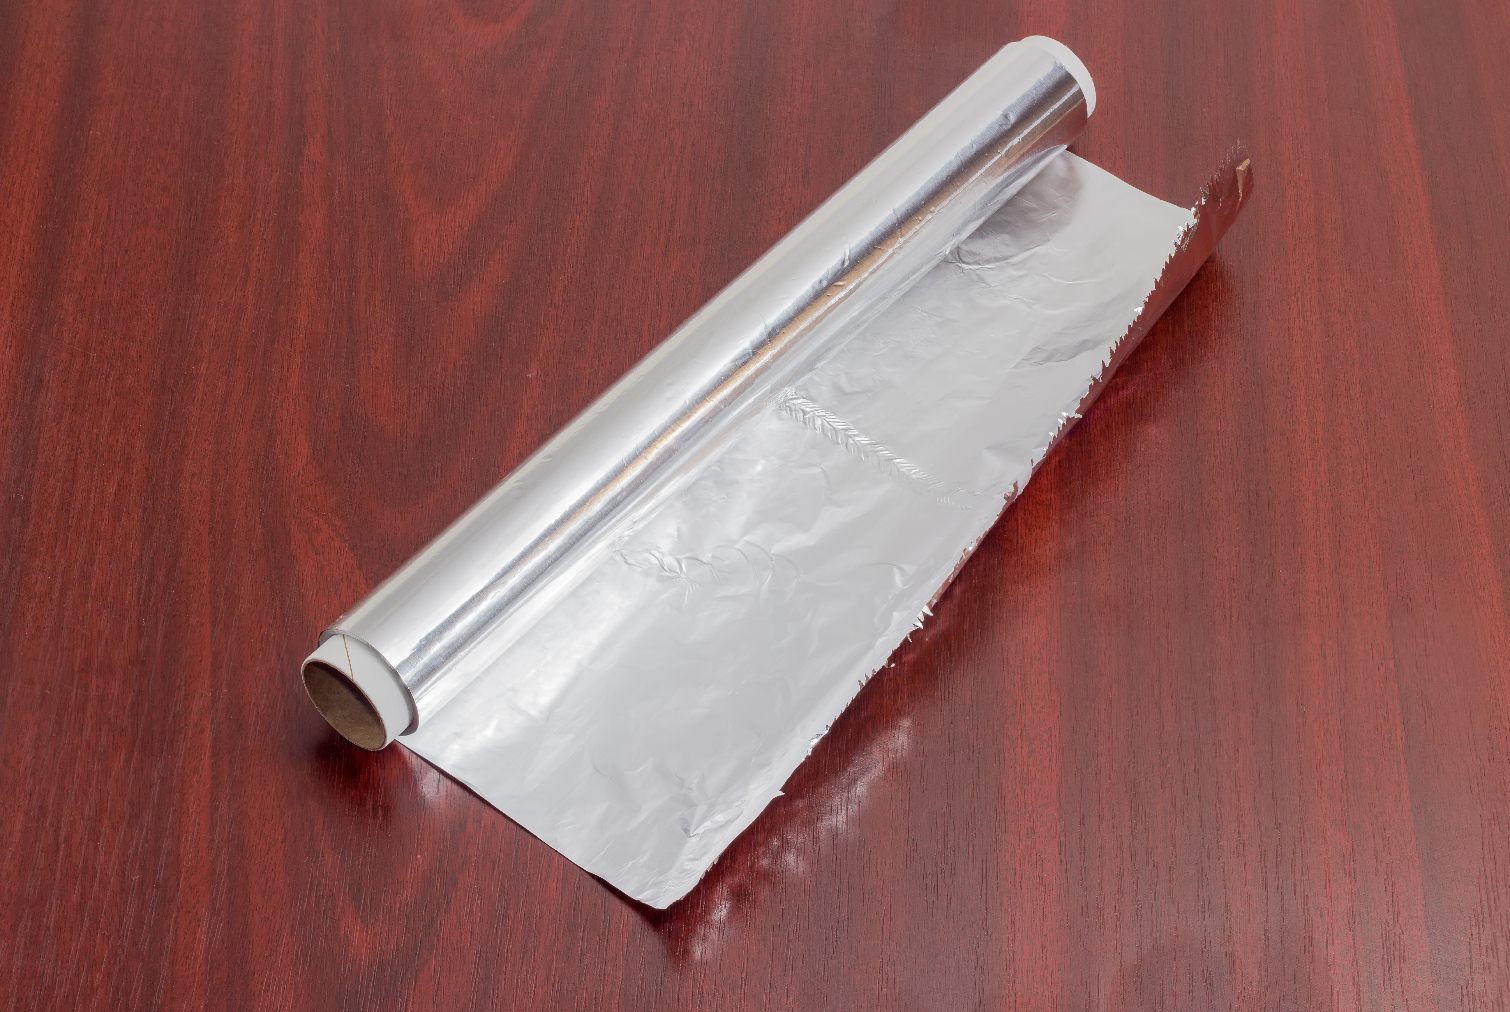 Why Do We Sometimes Call Aluminum Foil “Tin Foil”?